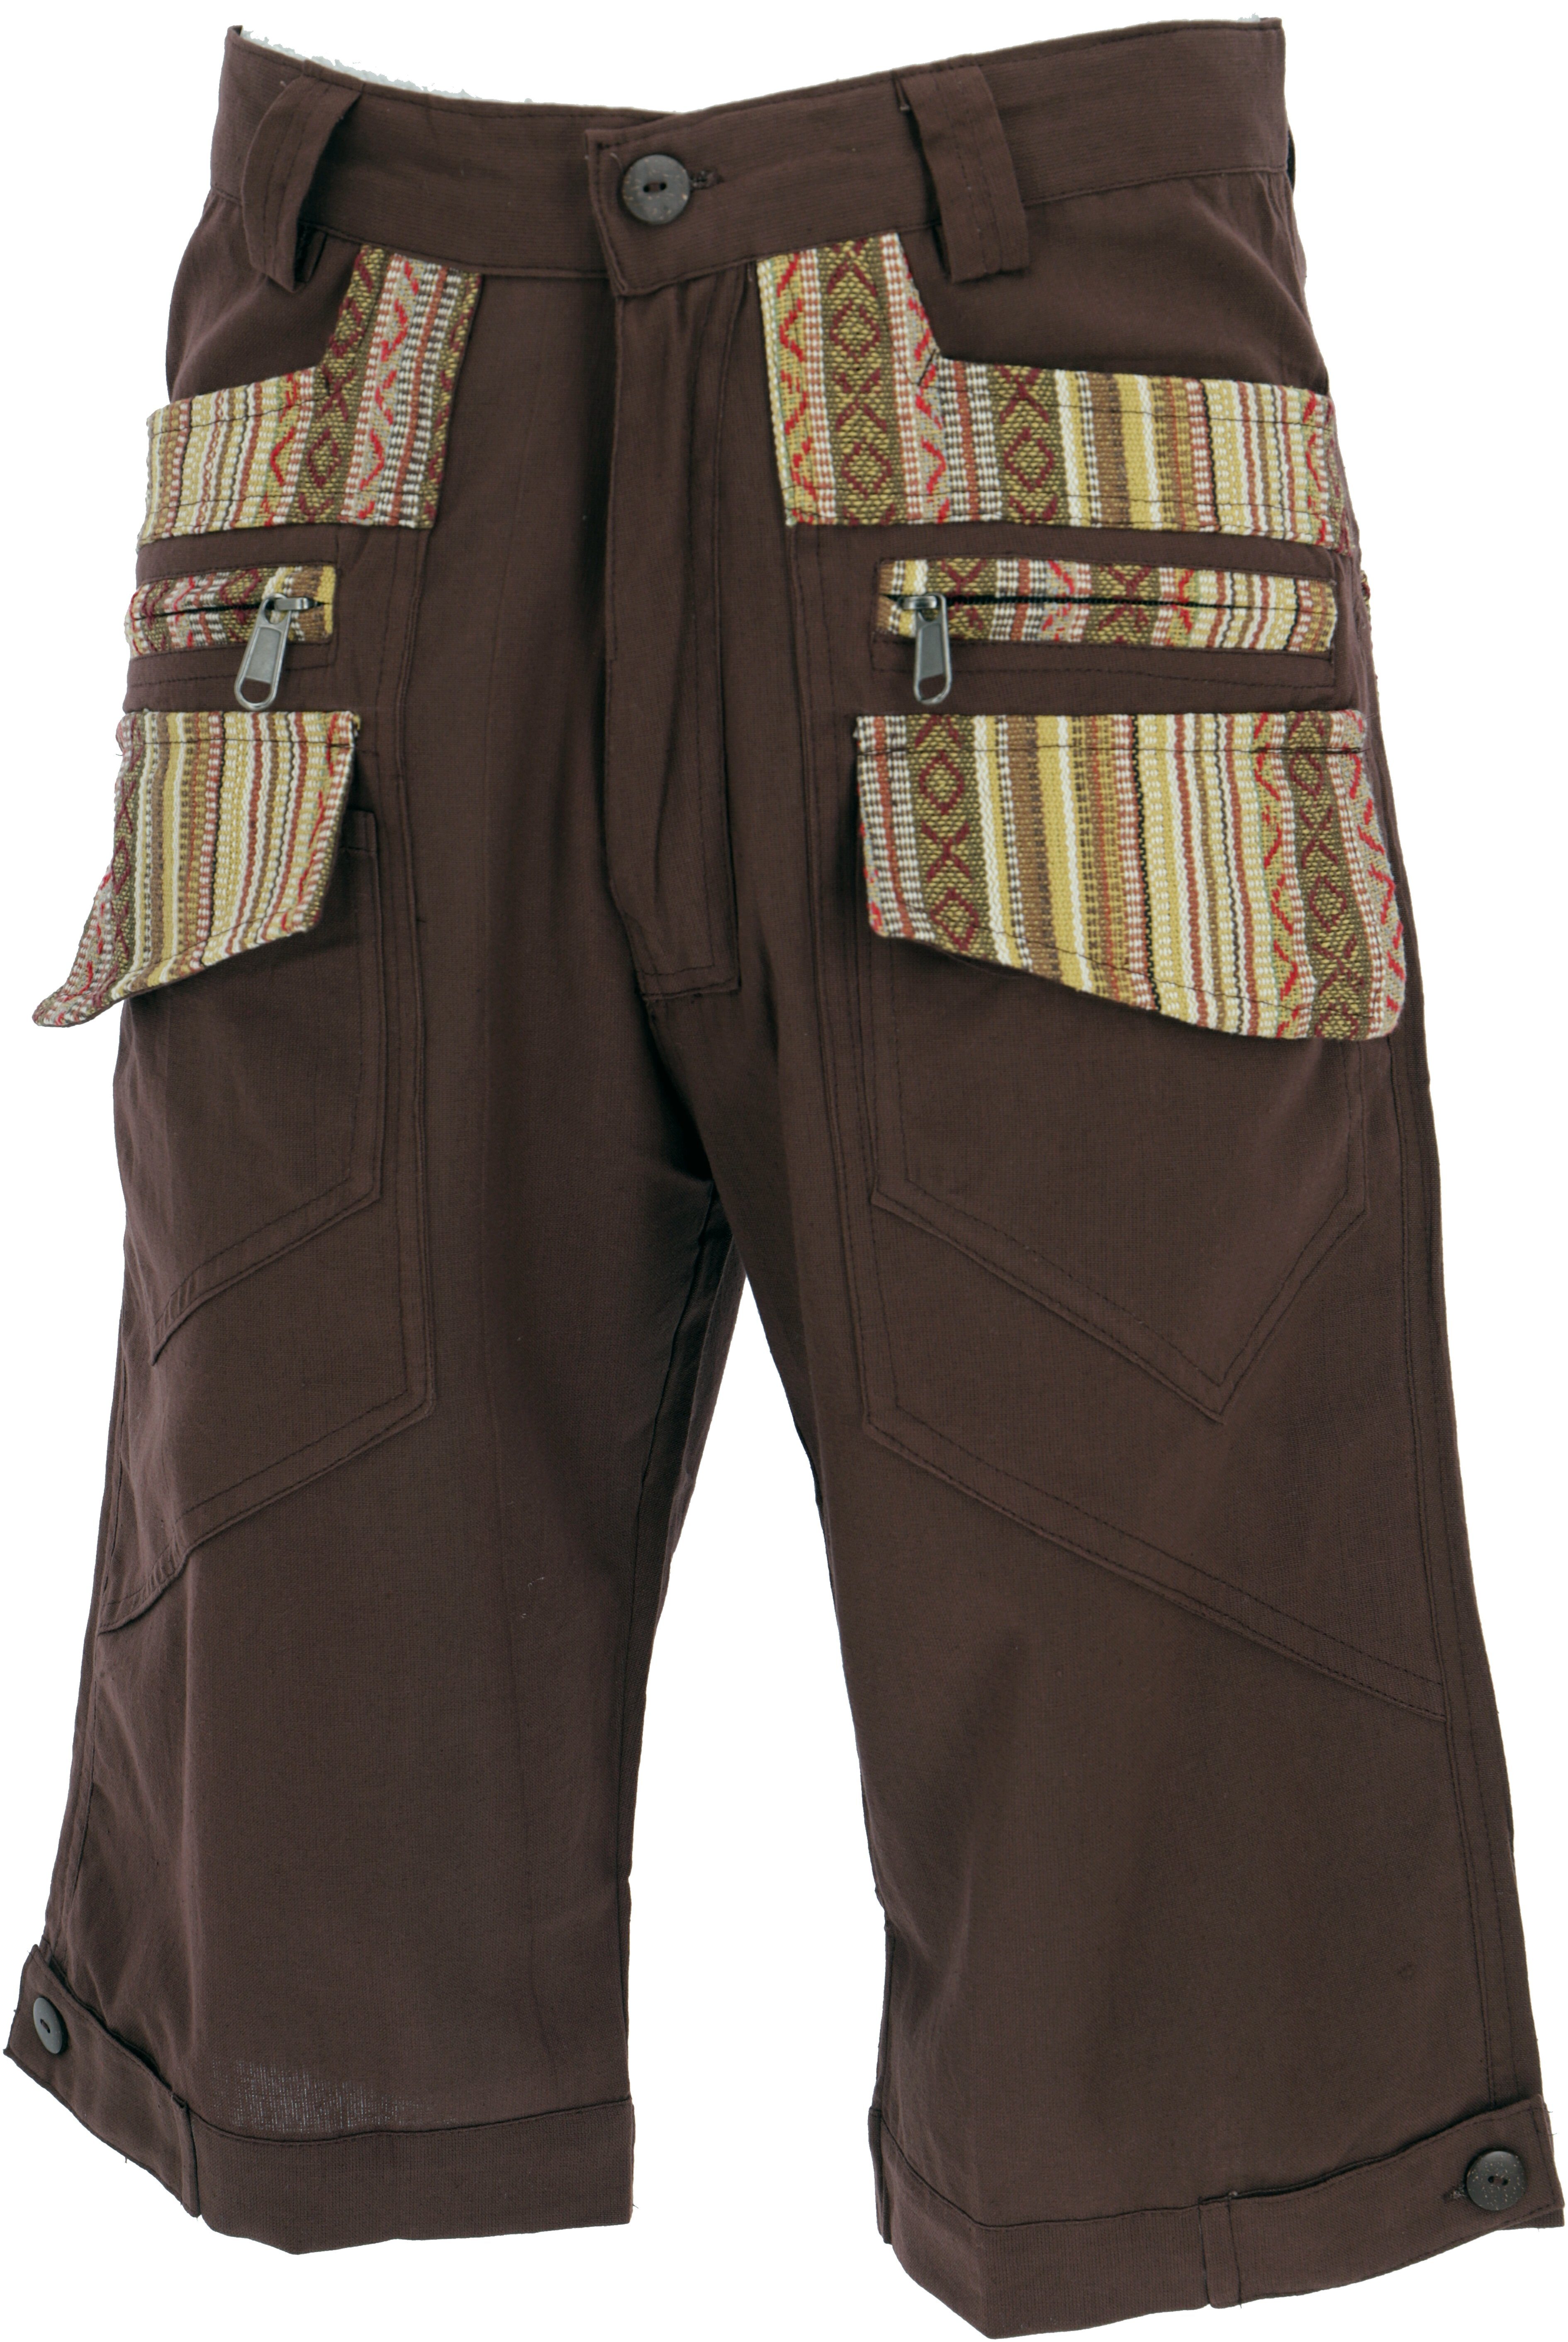 Guru-Shop Goa Relaxhose Ethno Kurze alternative Shorts braun Style, Hose, - Goa Bekleidung Yogahose,